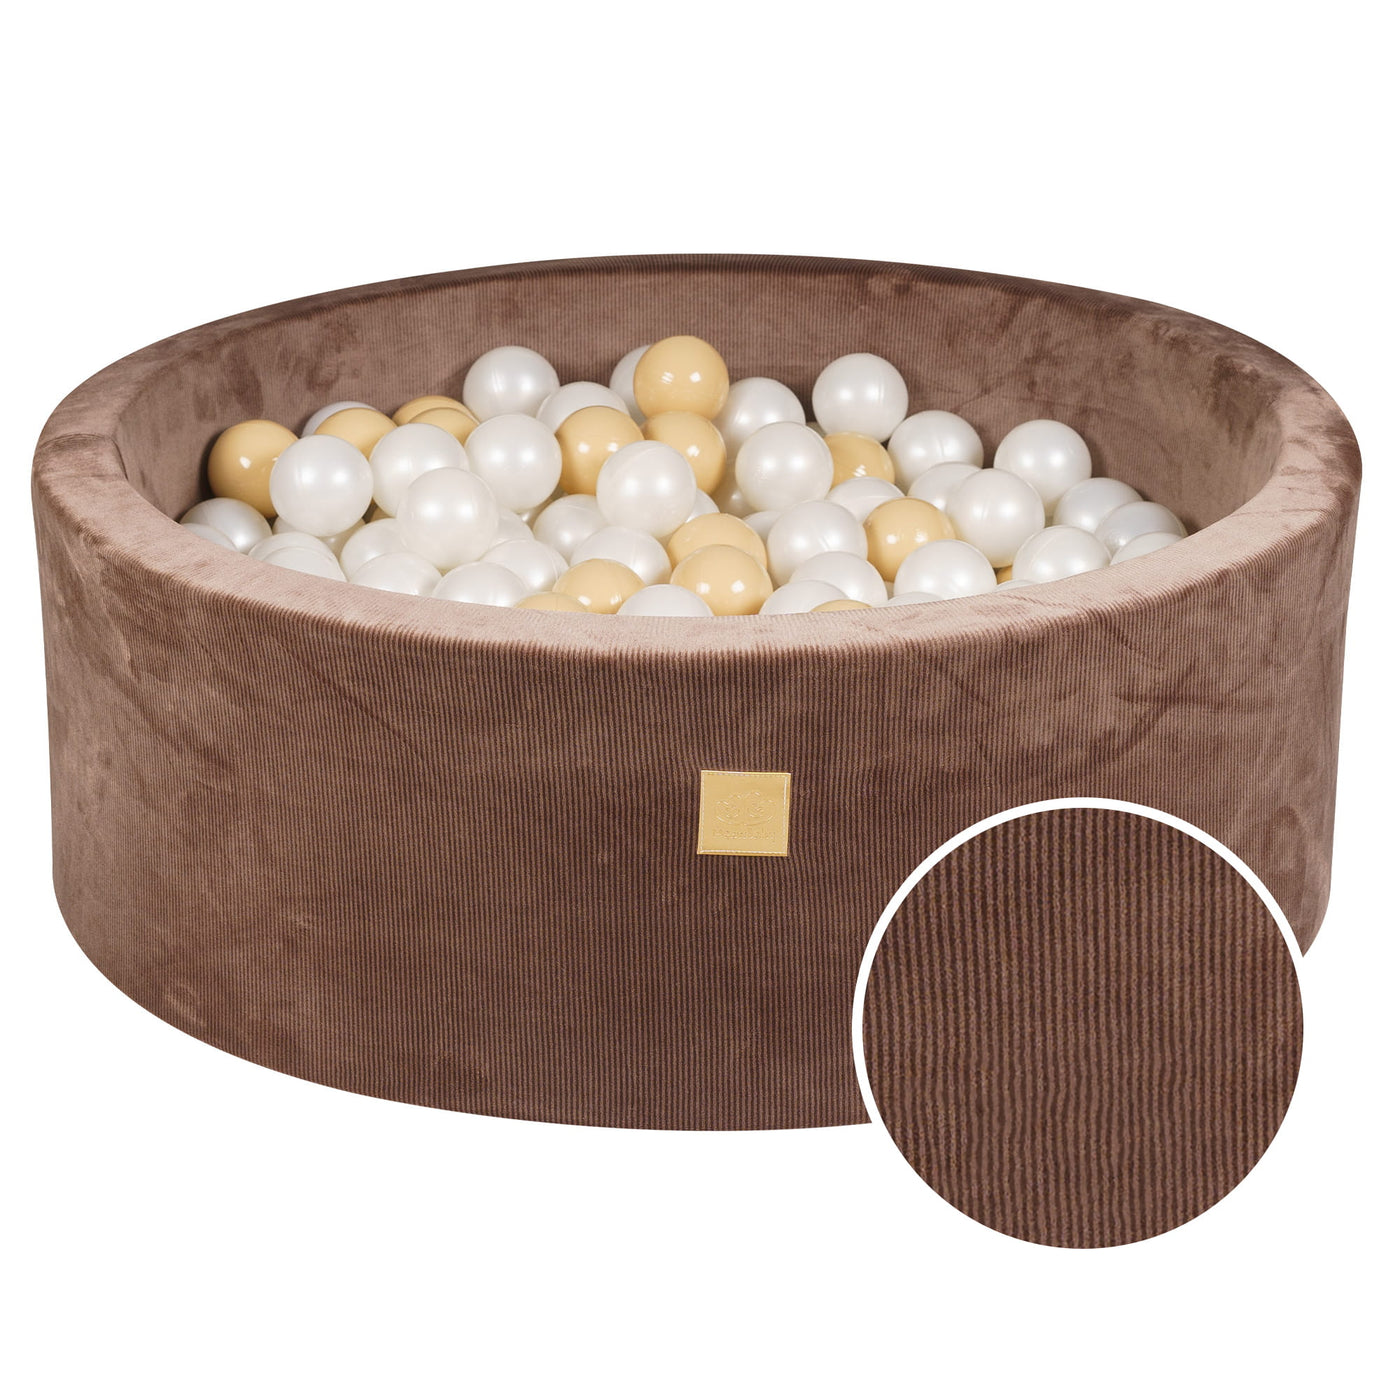 Velvet Corduroy Chocolate Ball Pit | Beige & Pearl White Balls